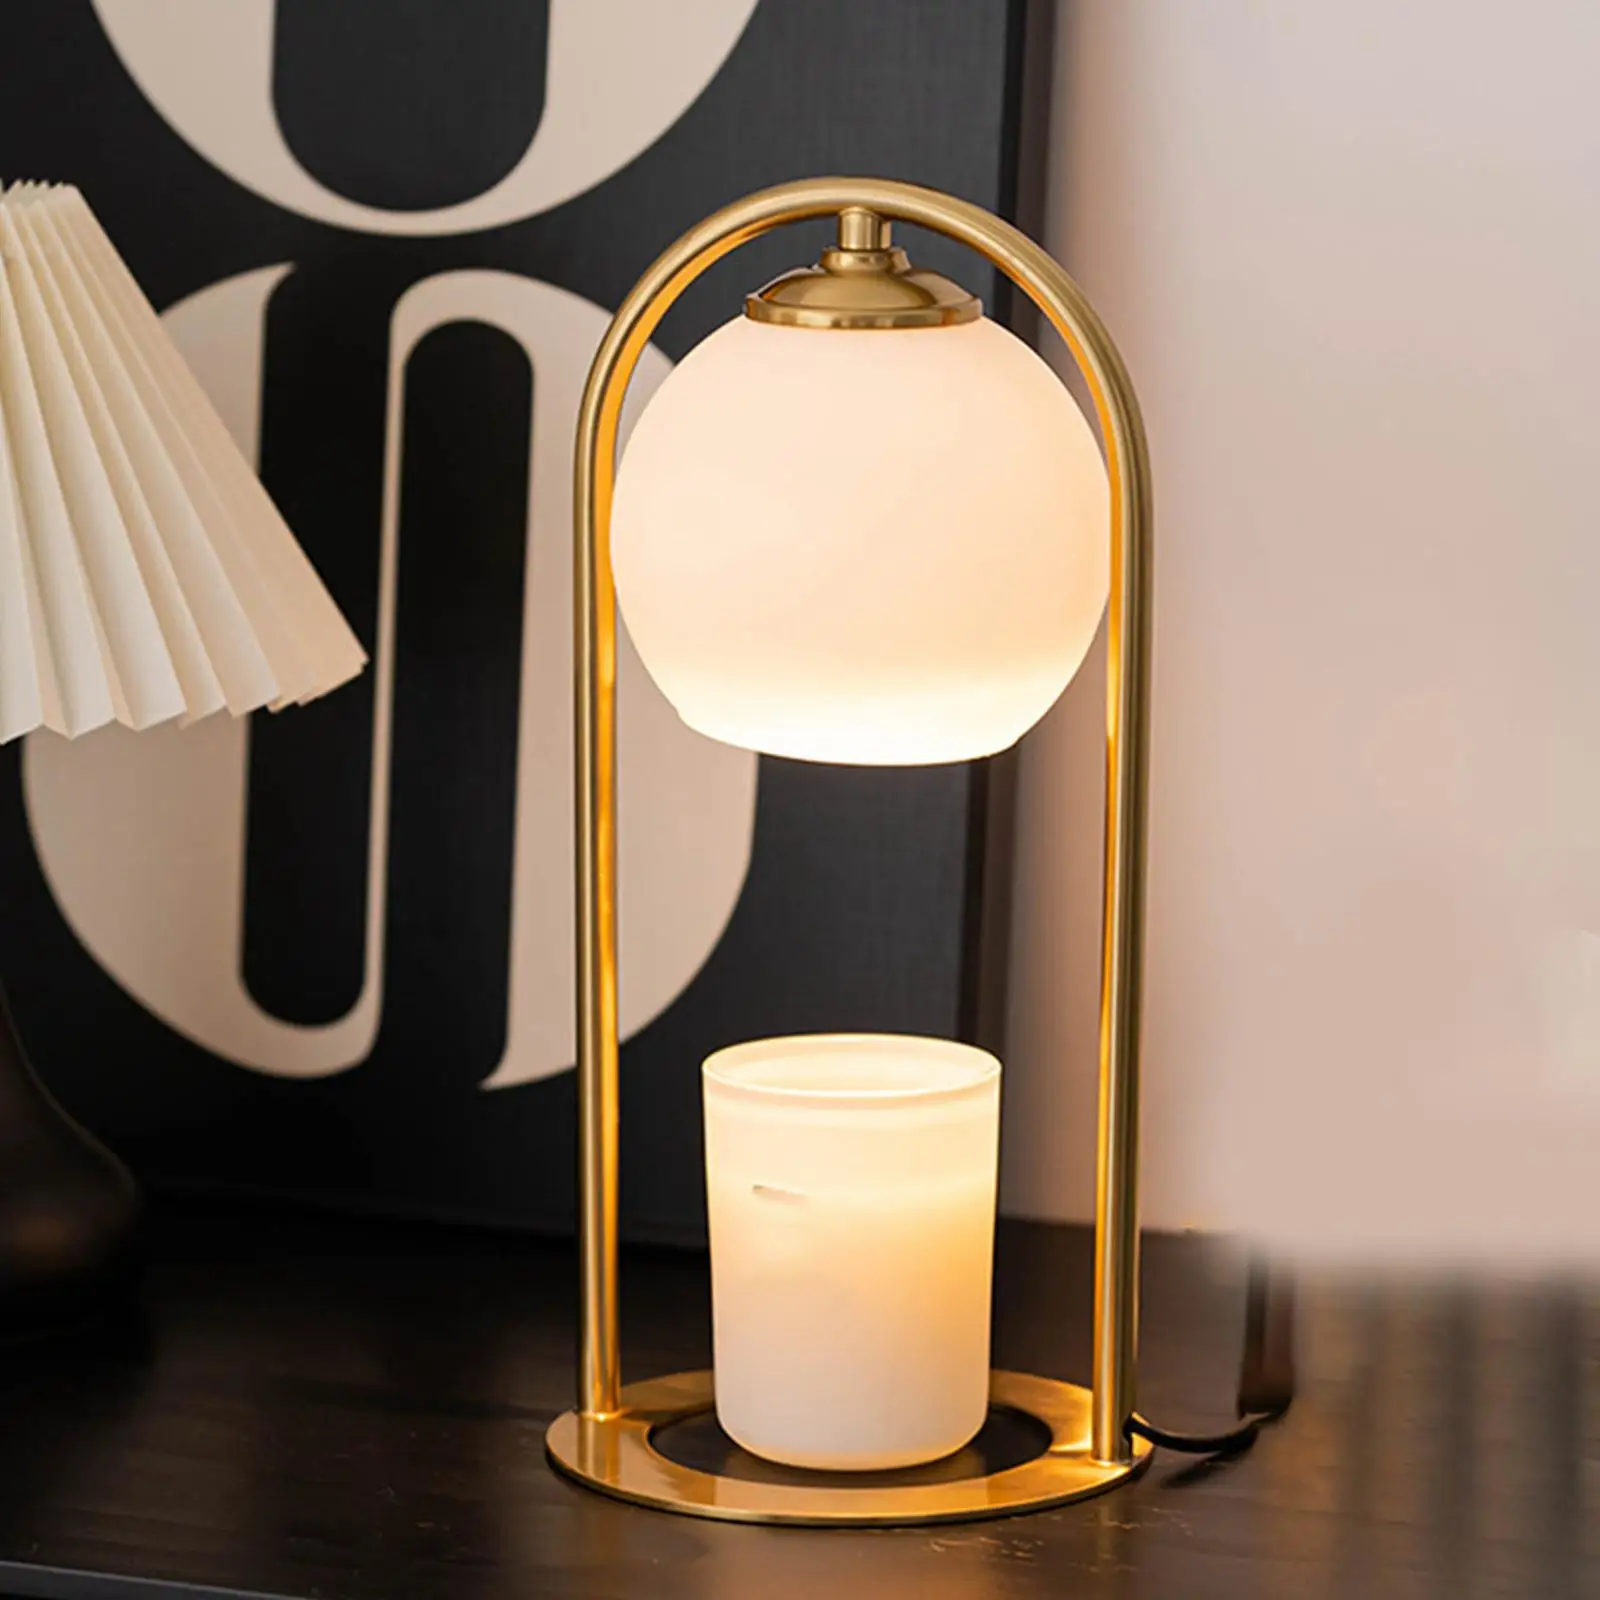 Candle Warmer Lamp Melting Lamp Decor Burner Diffuser Durable with Bulbs for Bedroom Study Room Home Housewarming EU Plug